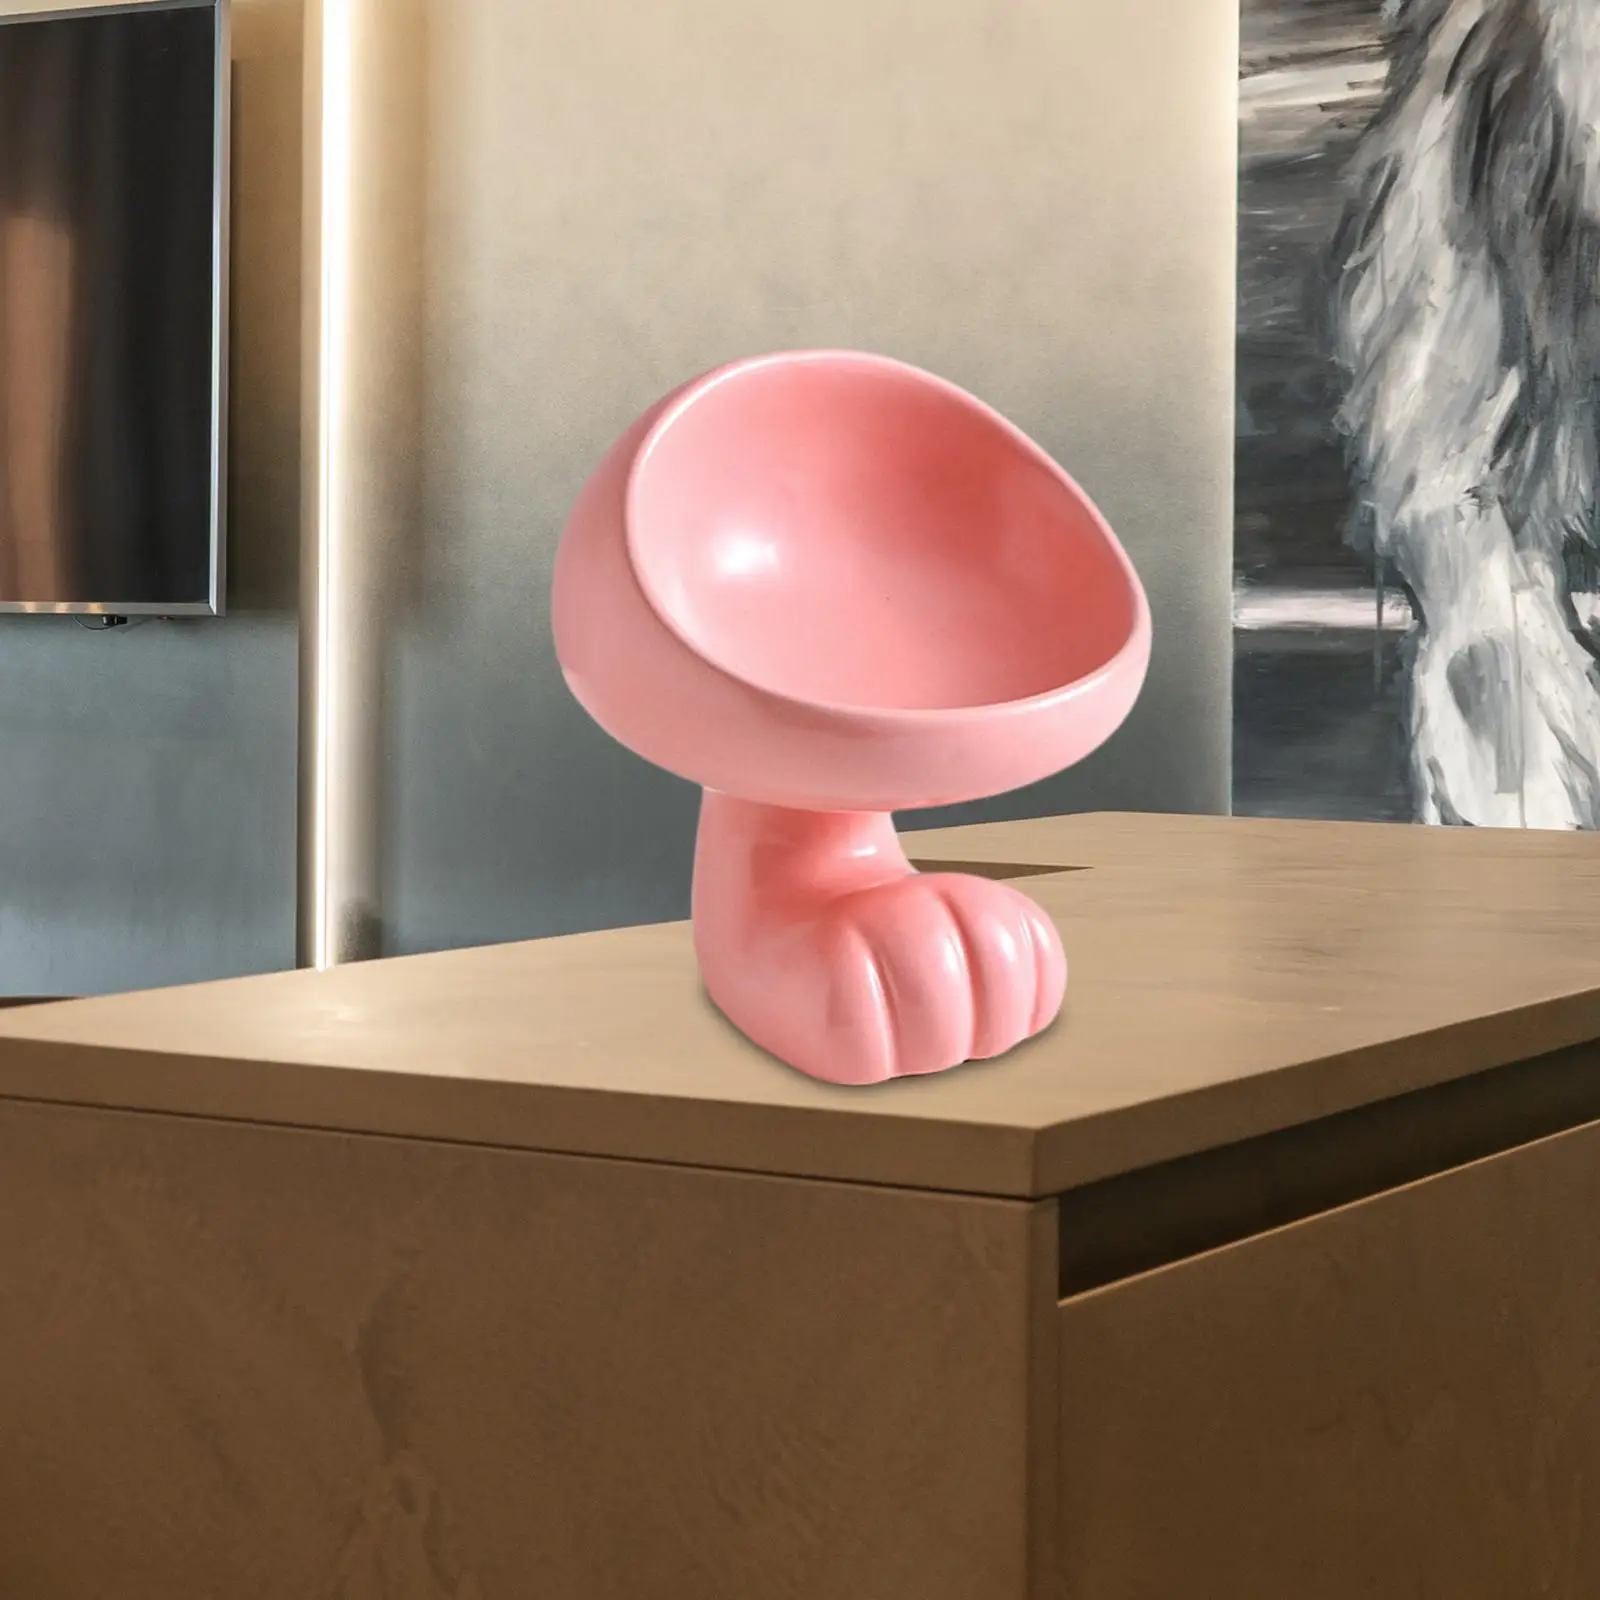 Snack Holder Novelty Ceramic Sculpture Ornament Large Mouth Storage Bowl Desk Organizer for Dining Porch Table Home Bedroom